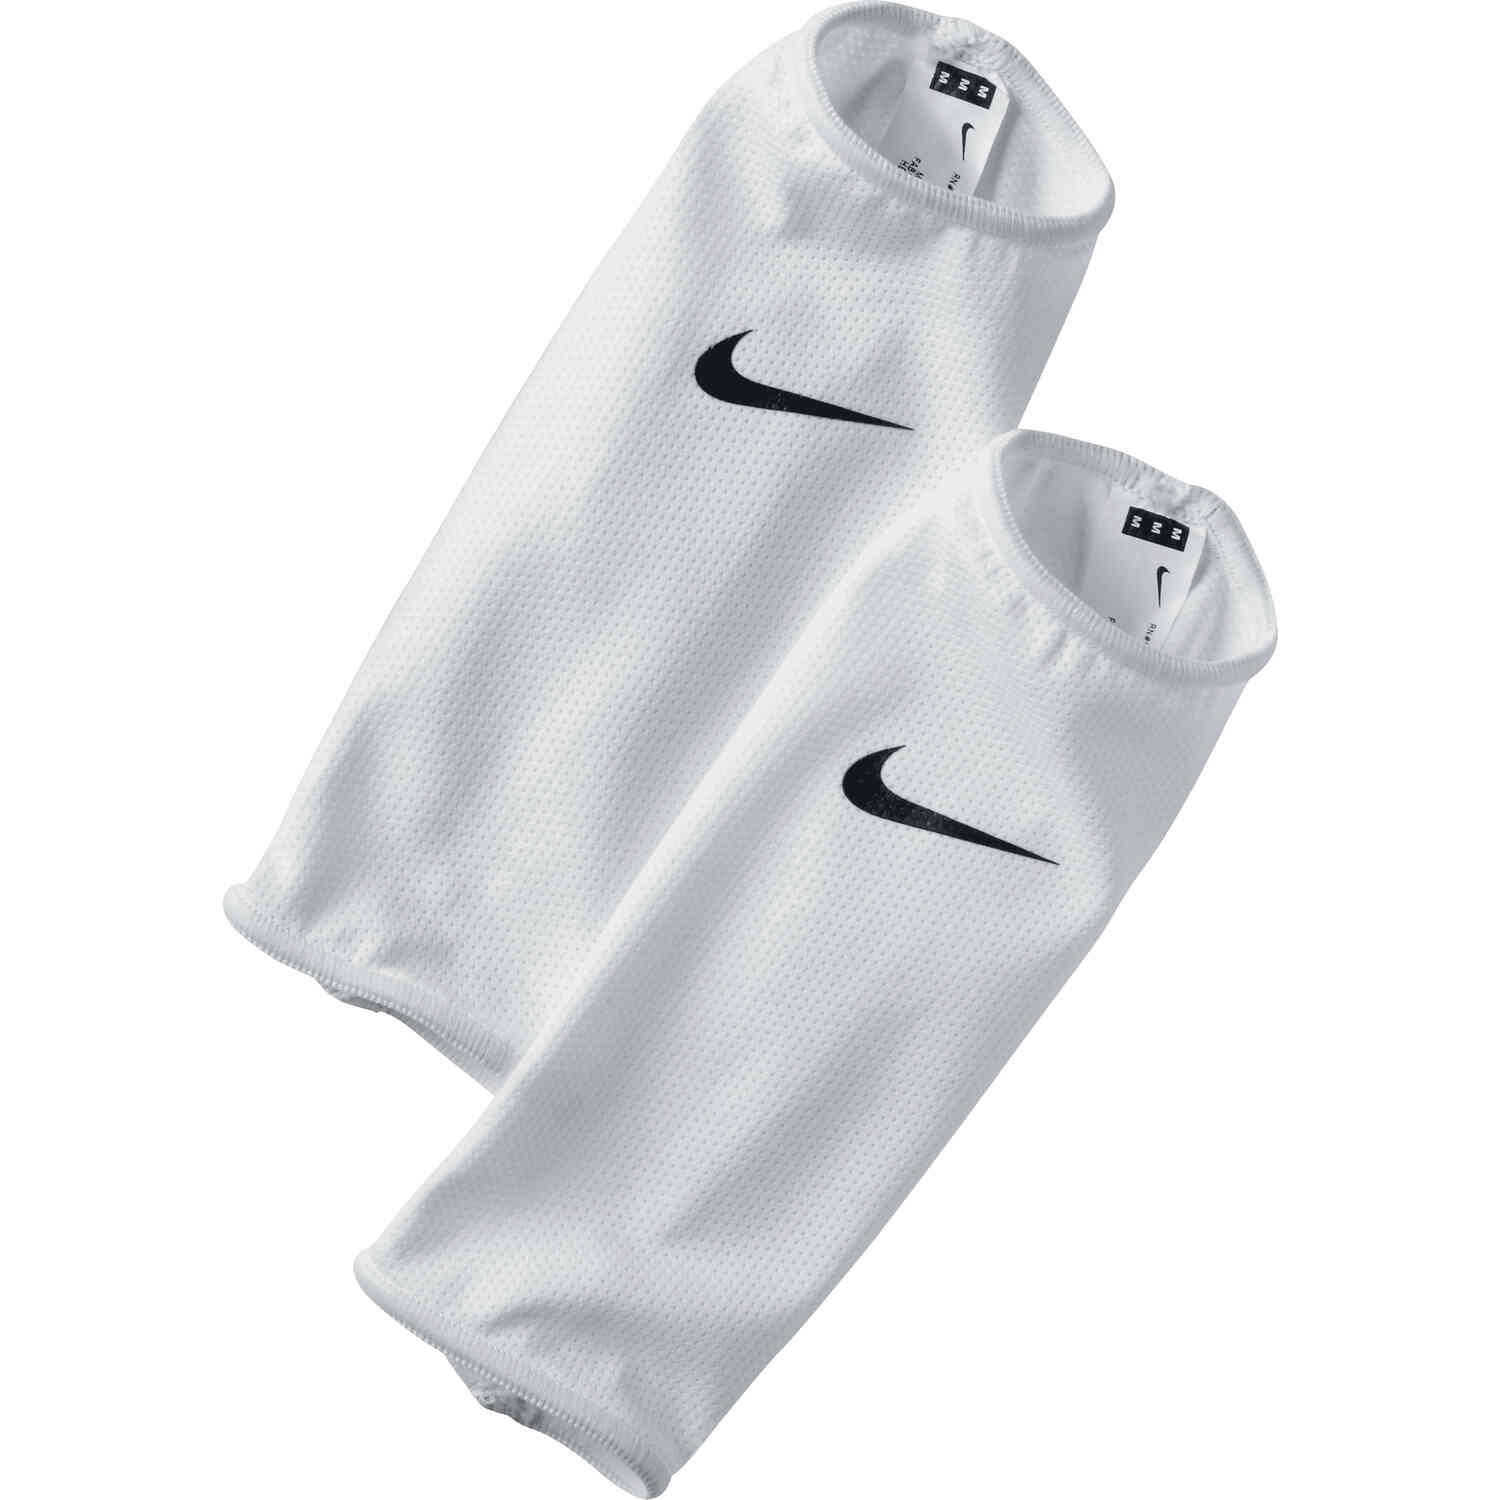 Nike Guard Lock Soccer Guard Sleeves (1 Pair).